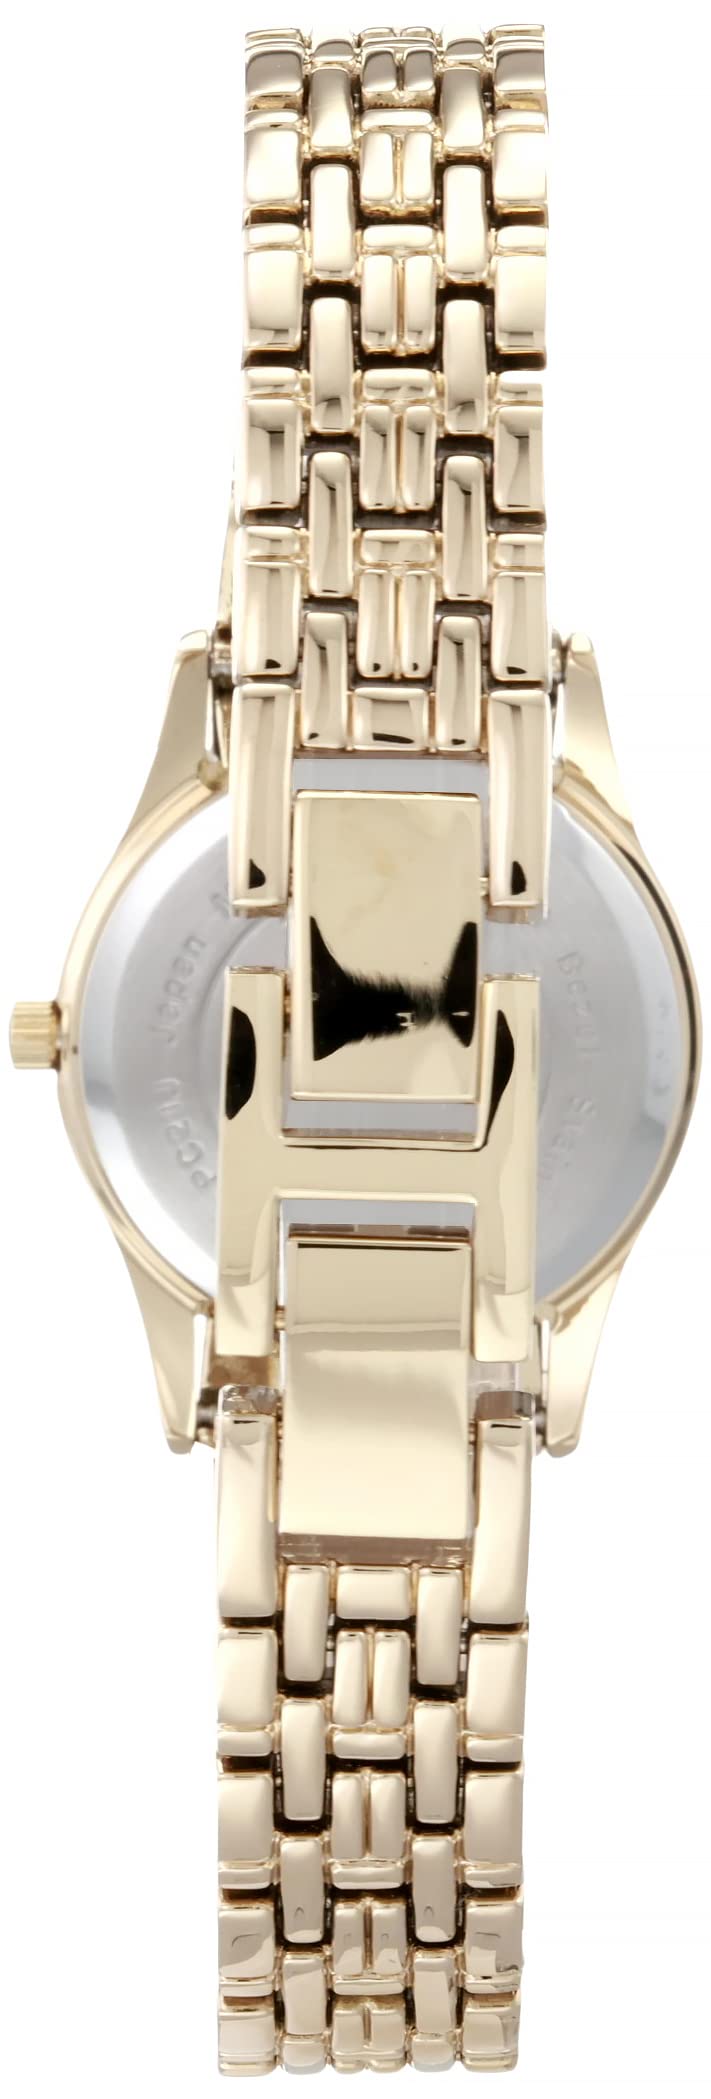 Armitron Women's Genuine Crystal Accented Bracelet Watch